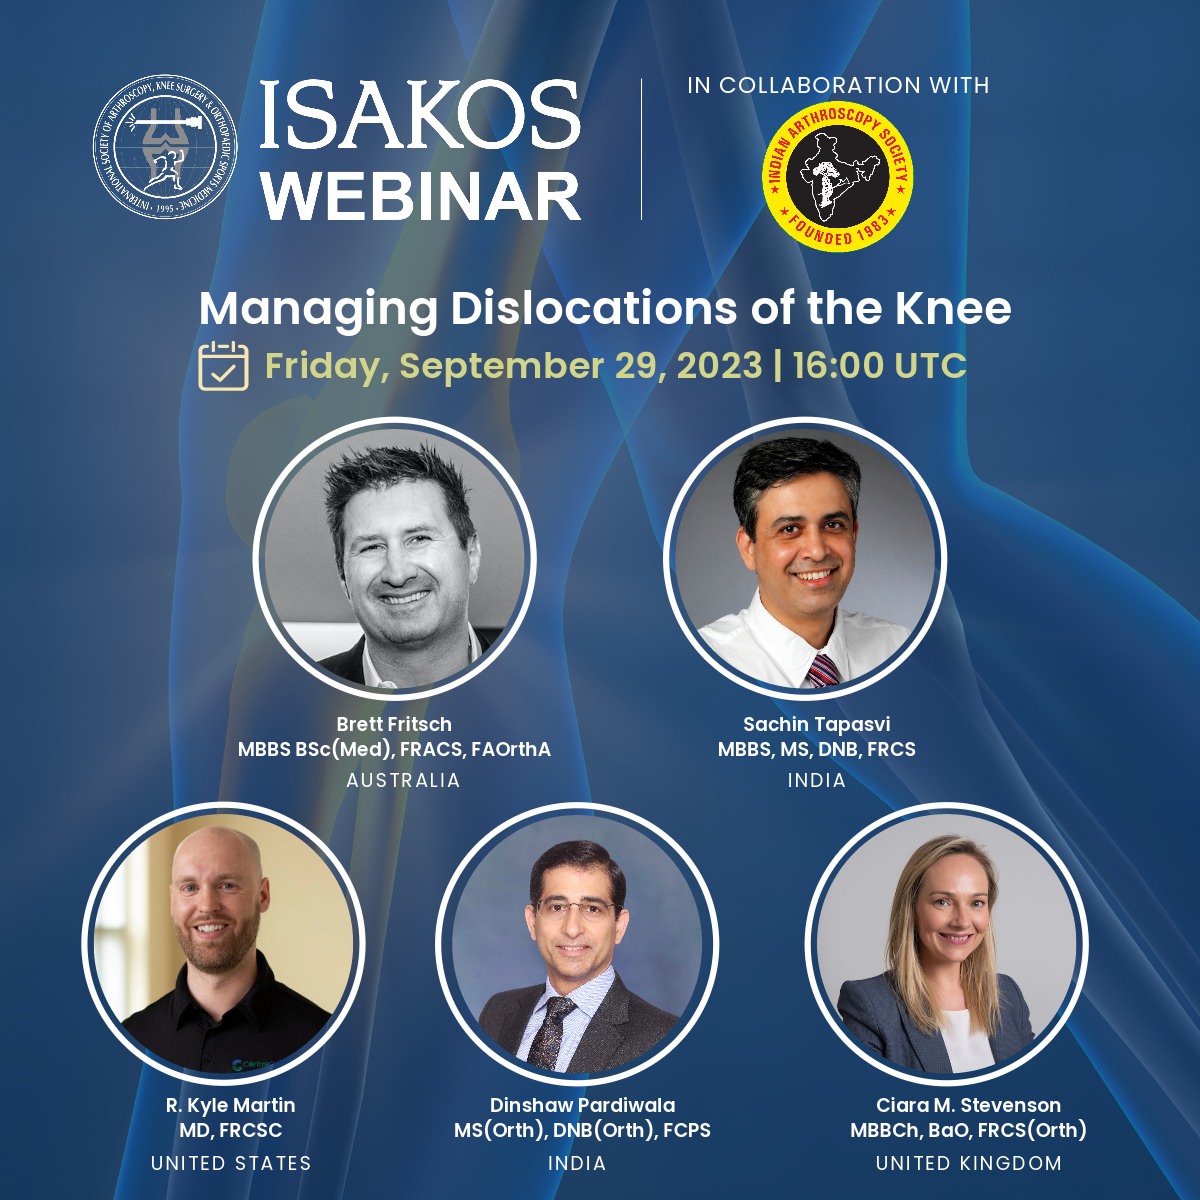 ISAKOS Webinar Managing Dislocations of the Knee In Collaboration with the Indian Arthroscopy Society Friday, September 29, 2023 16:00 UTC Register now: isakos.com/Webinars/Regis…